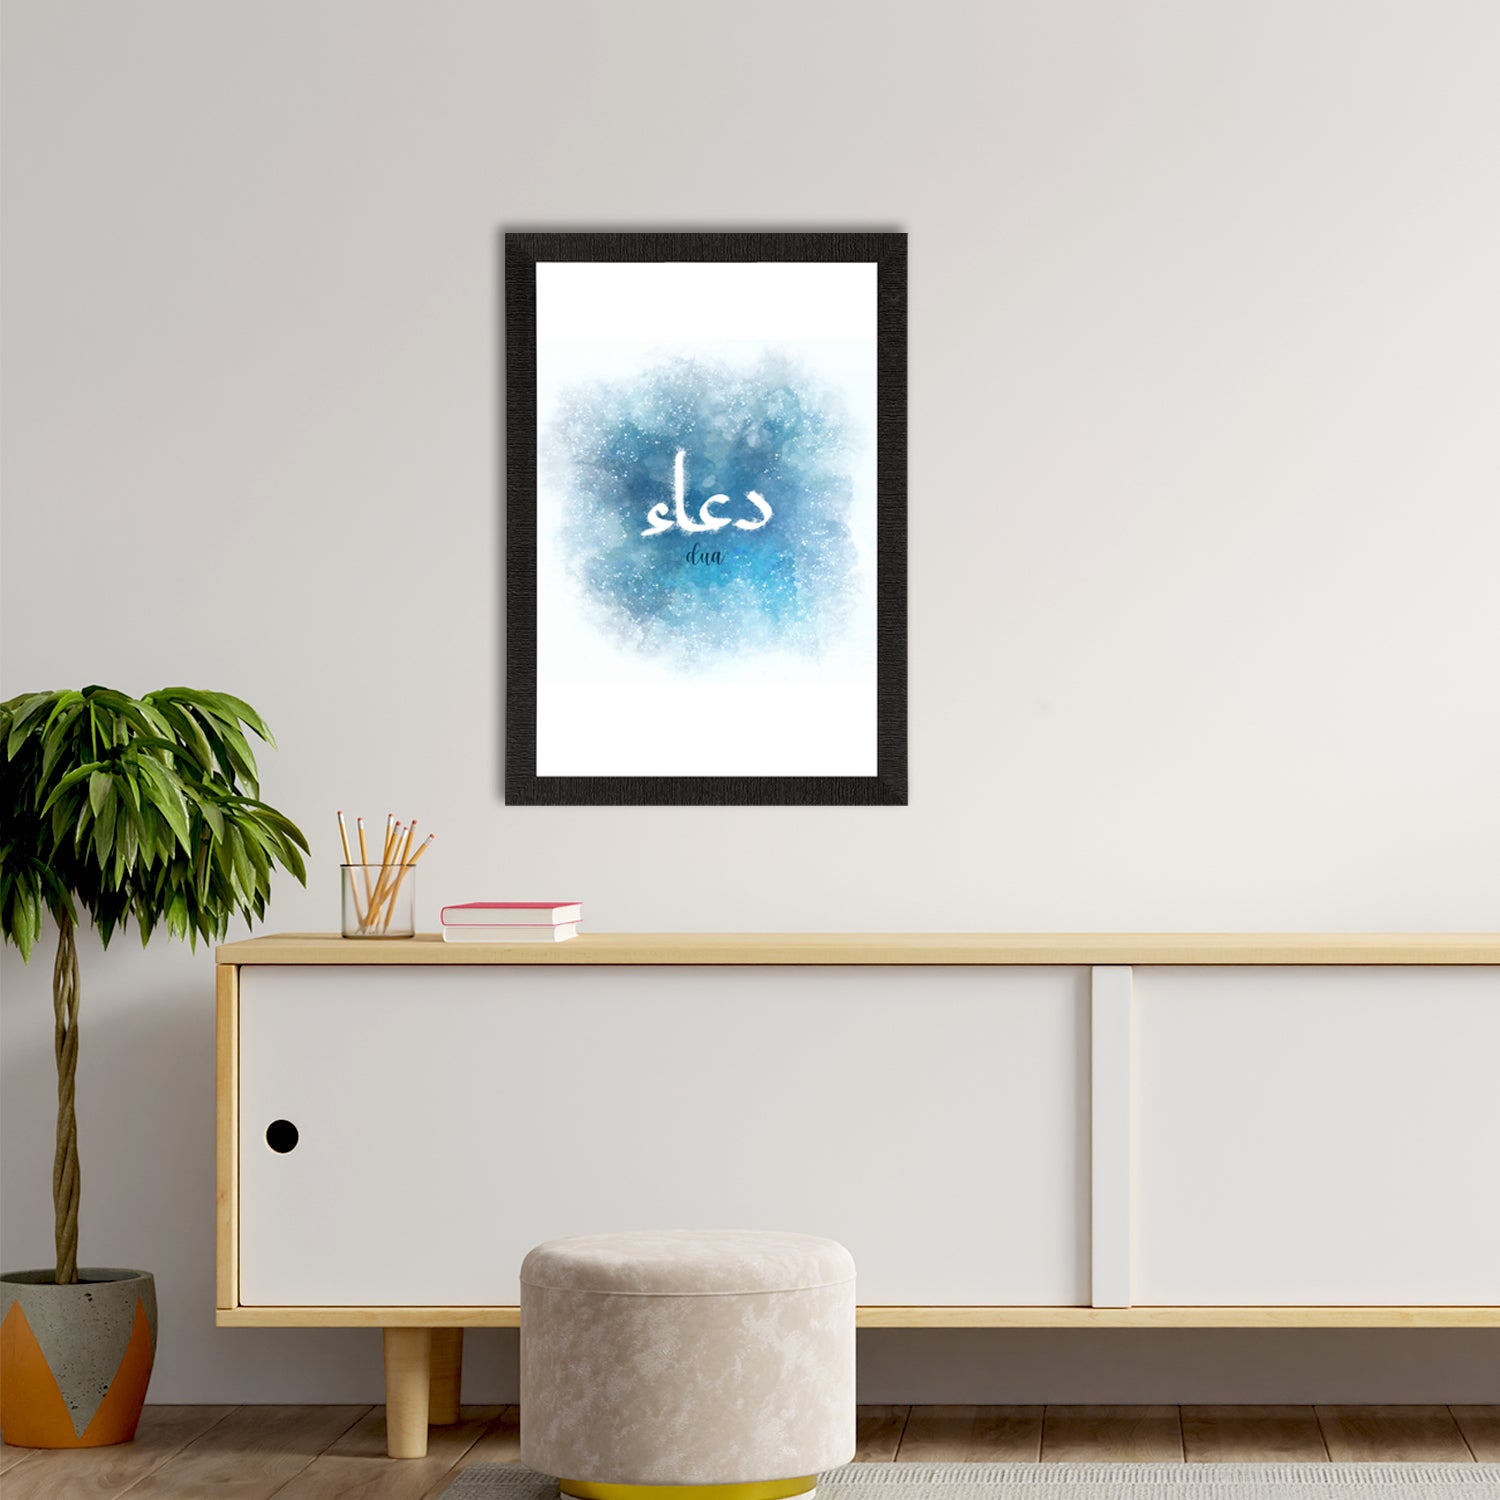 Dua Islamic Arabic Calligraphy Painting Digital Printed Religious Wall Art 2